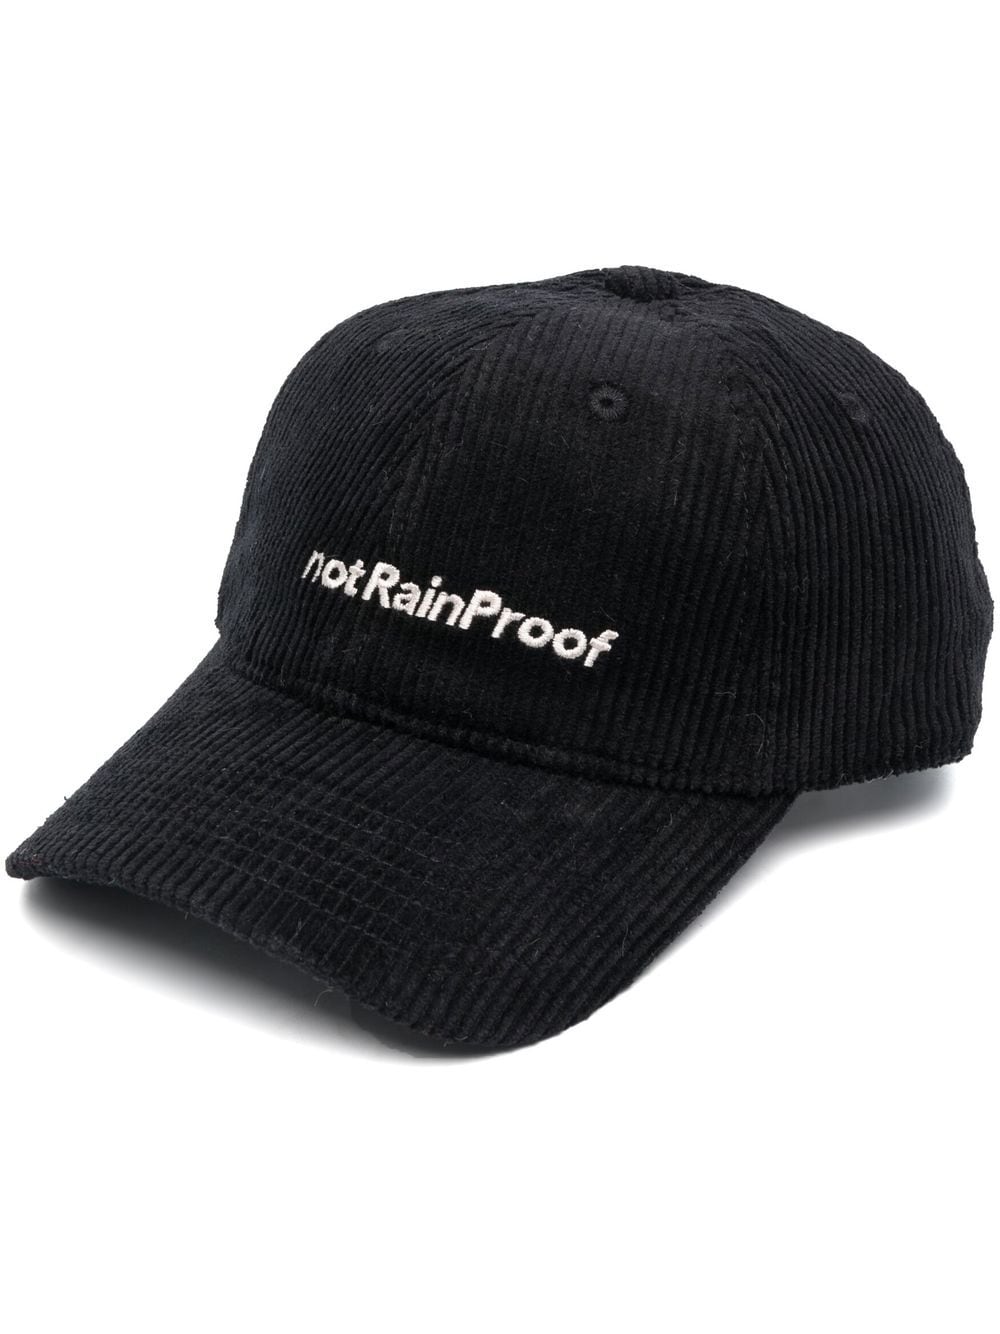 STYLAND x notRainProof embroidered-slogan baseball cap - Black von STYLAND